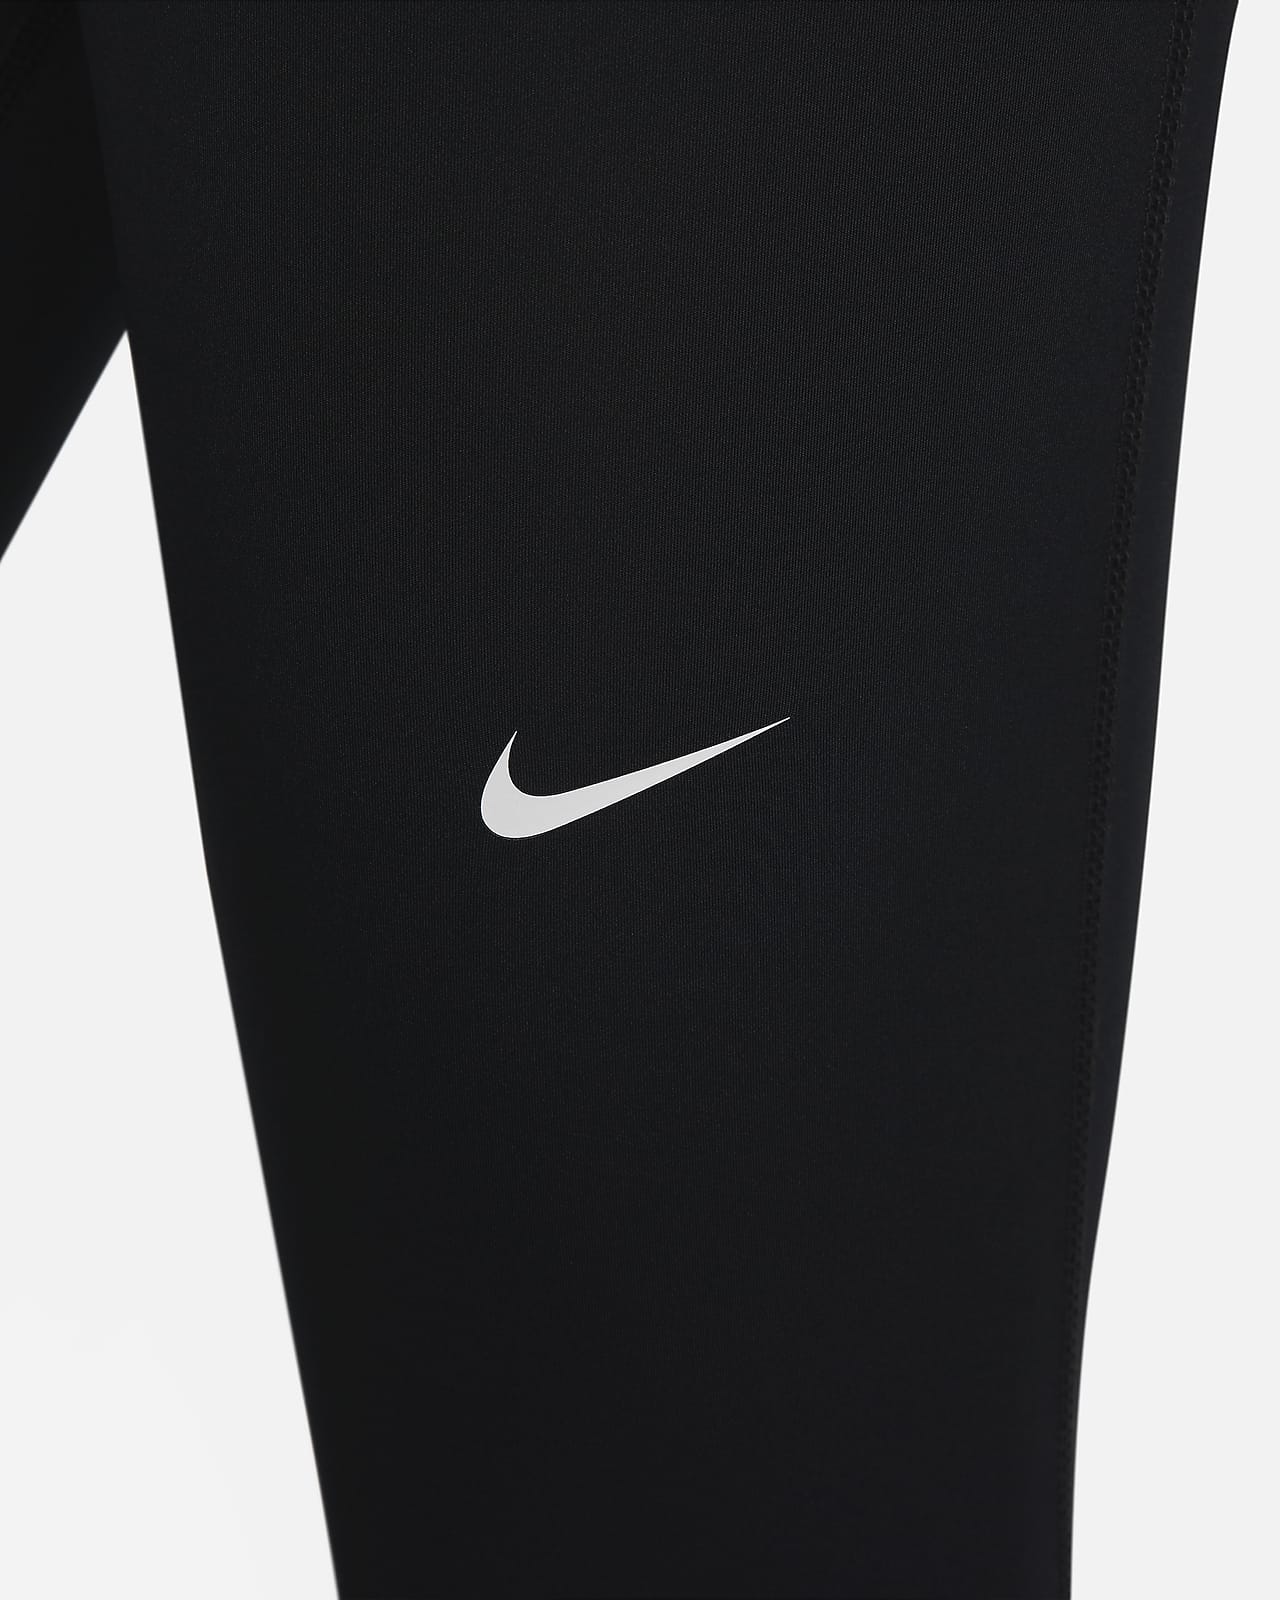 Legging femme Nike Pro 365 - Nike - Marques - Textile